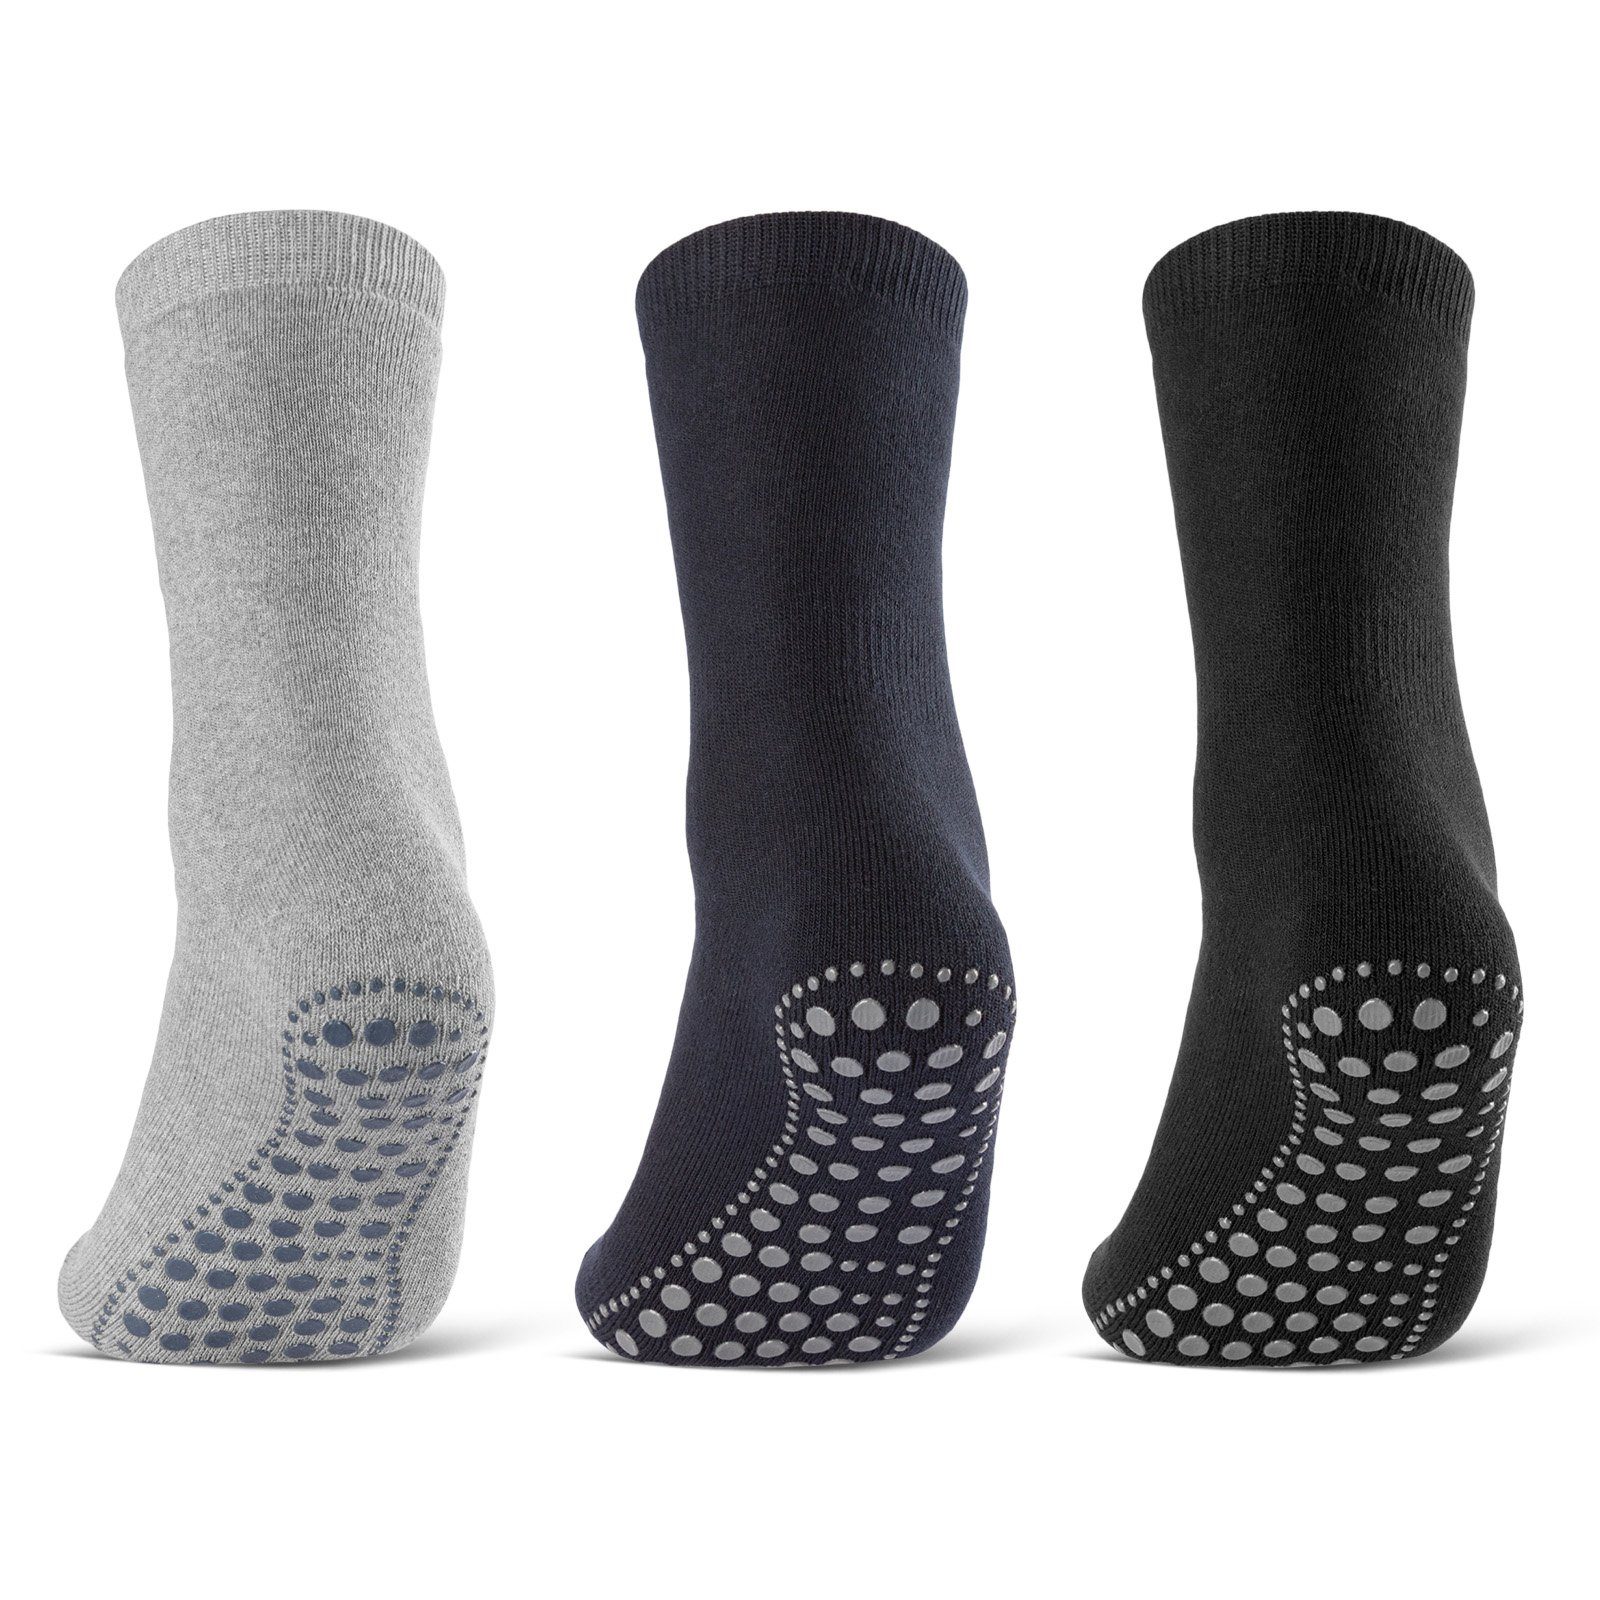 Noppen WP Rutsch Blau, 3-Paar, ABS Socken Stoppersocken Grau, - "Premium" Schwarz-Blau-Grau oder Anti Damen ABS-Socken sockenkauf24 Paar 3 (Schwarz, 6 8600 Herren Socken 43-46)